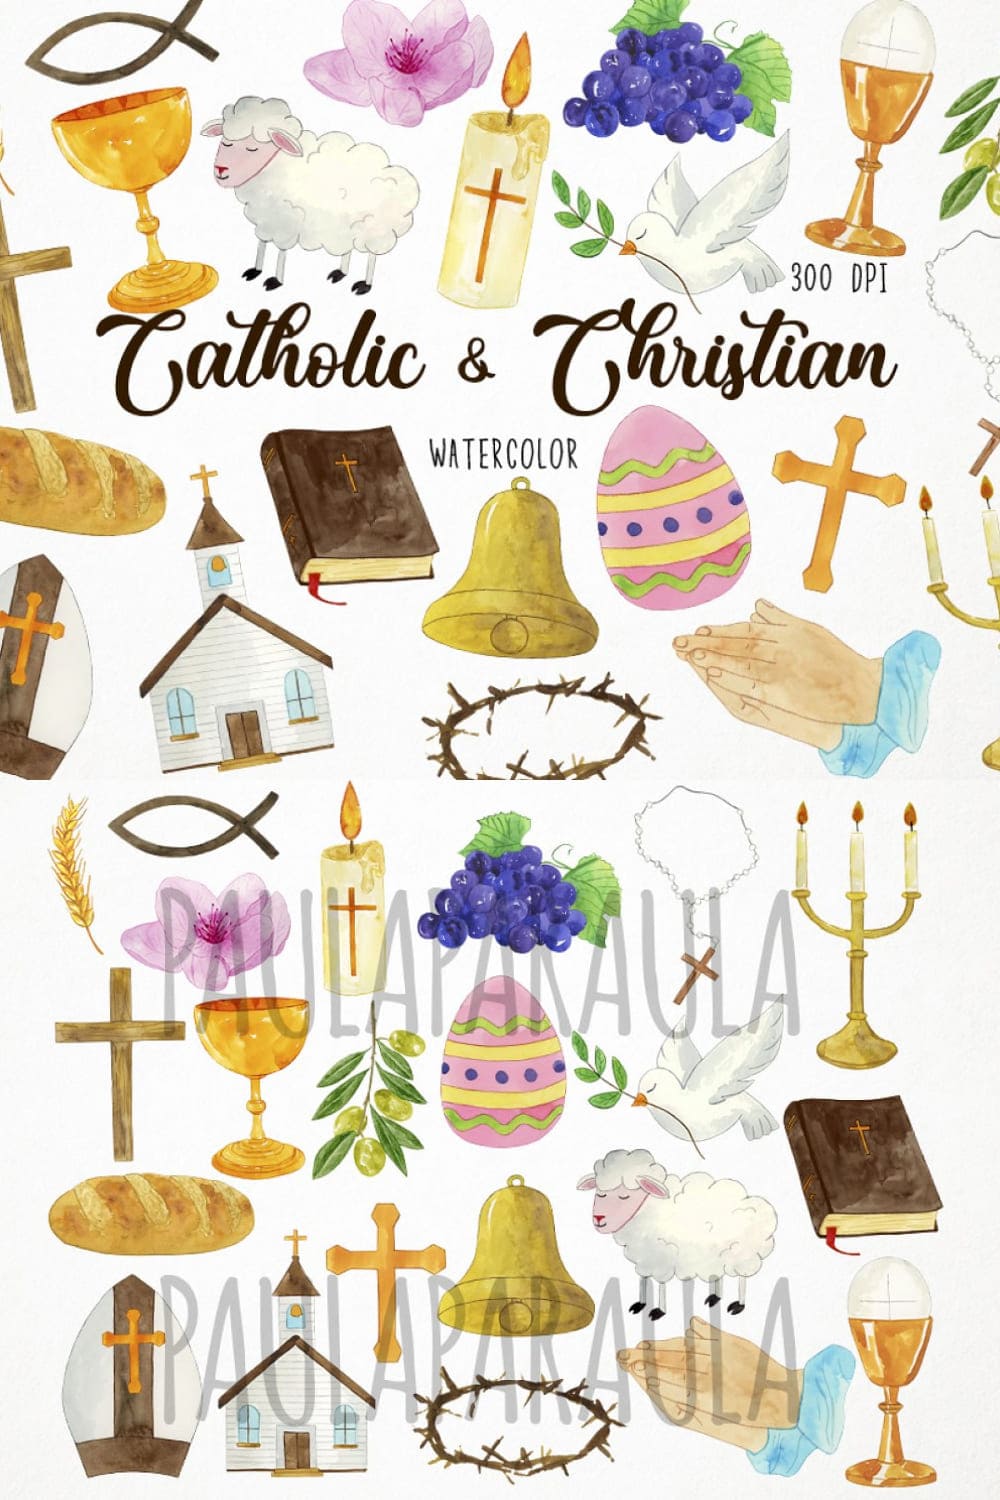 Watercolor Catholic Clipart - Pinterest.